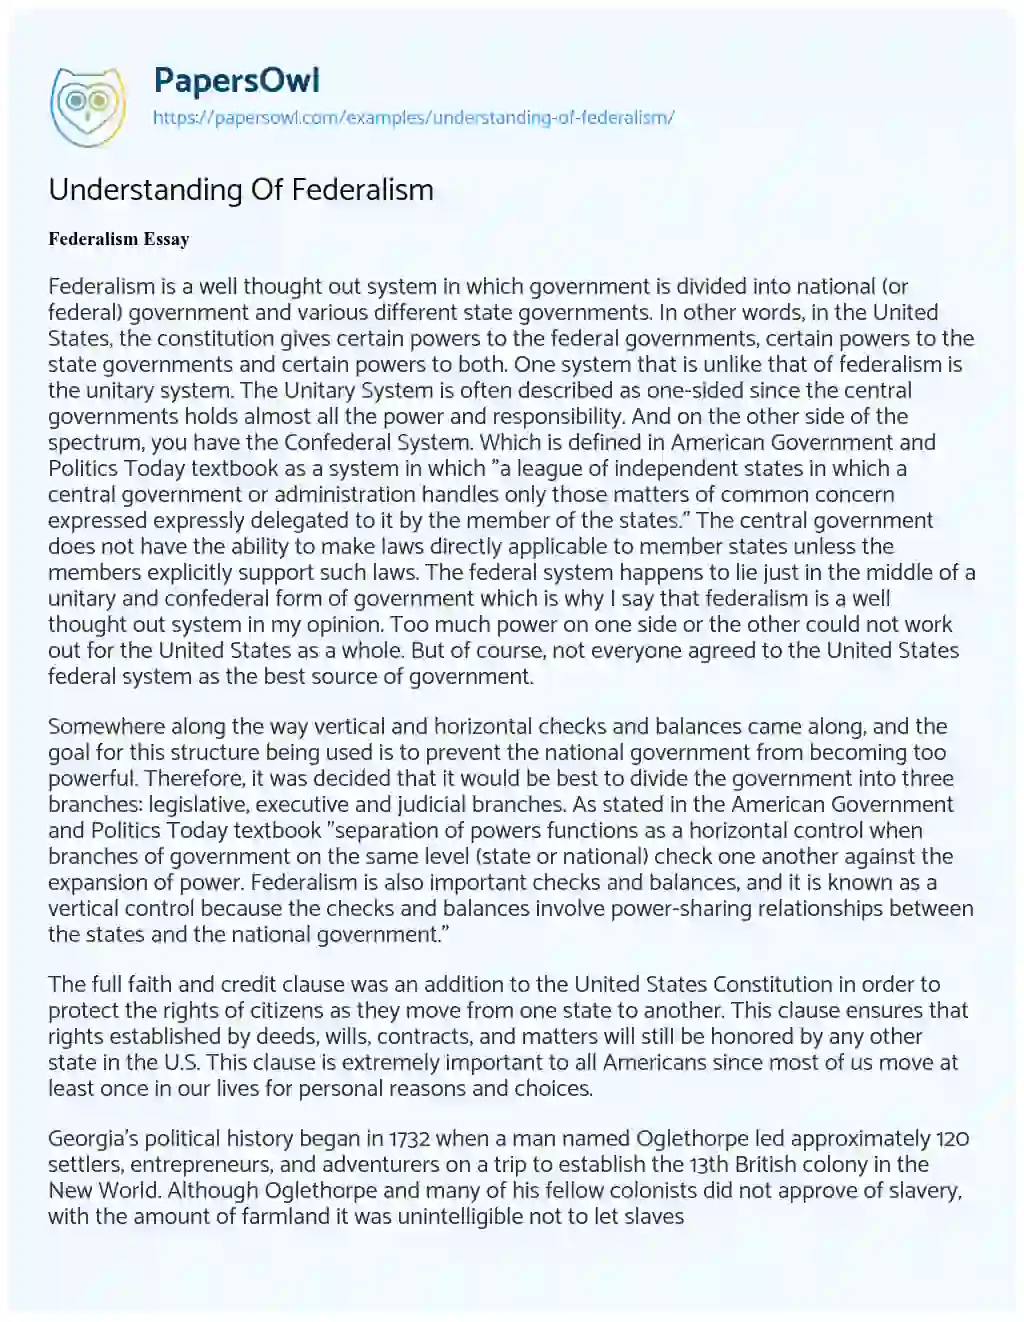 Essay on Understanding of Federalism